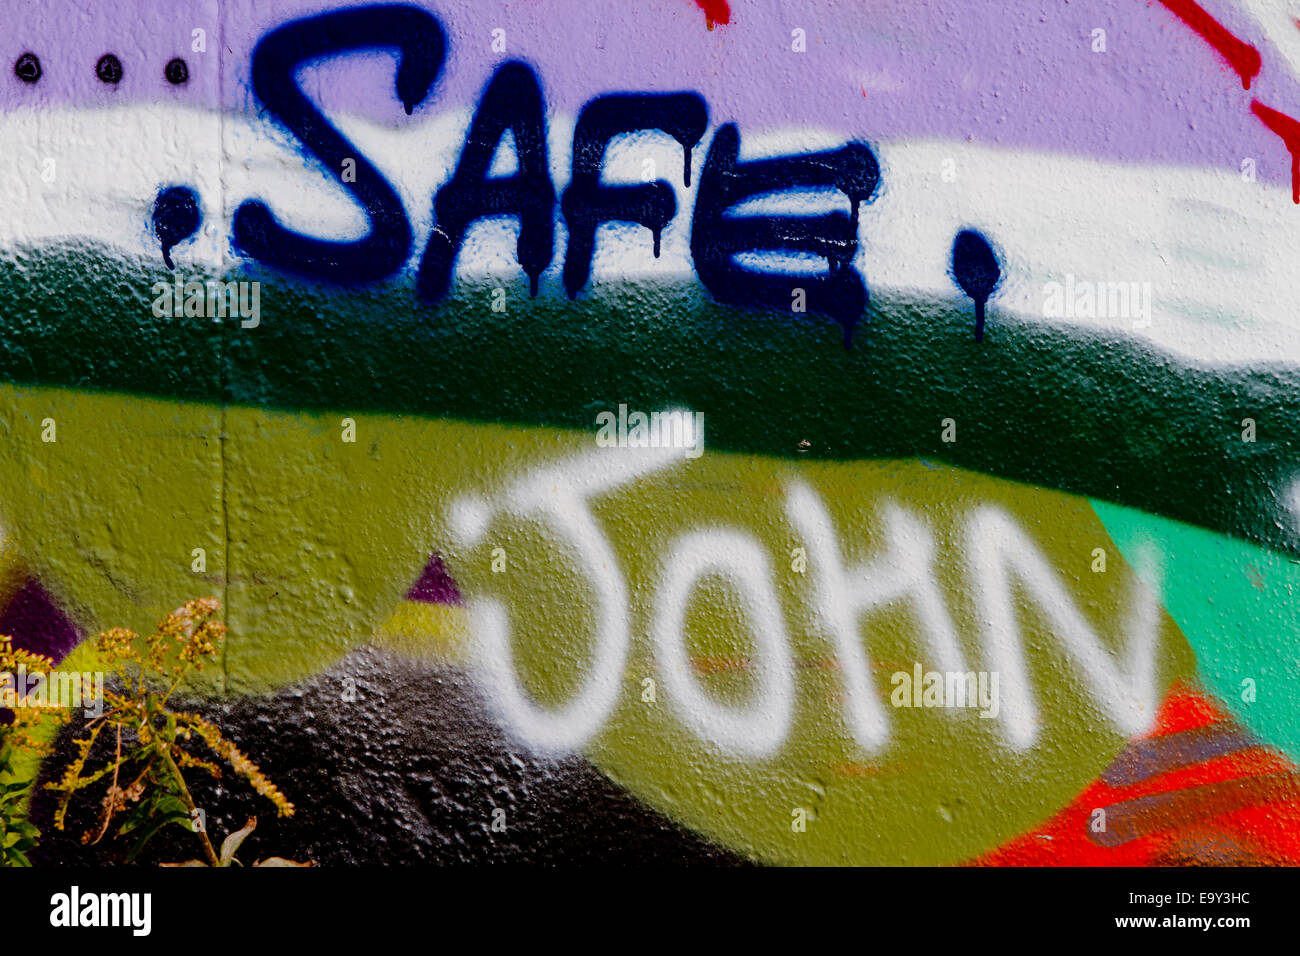 Seguro John colorido graffiti urbano de muro de Berlín Foto de stock